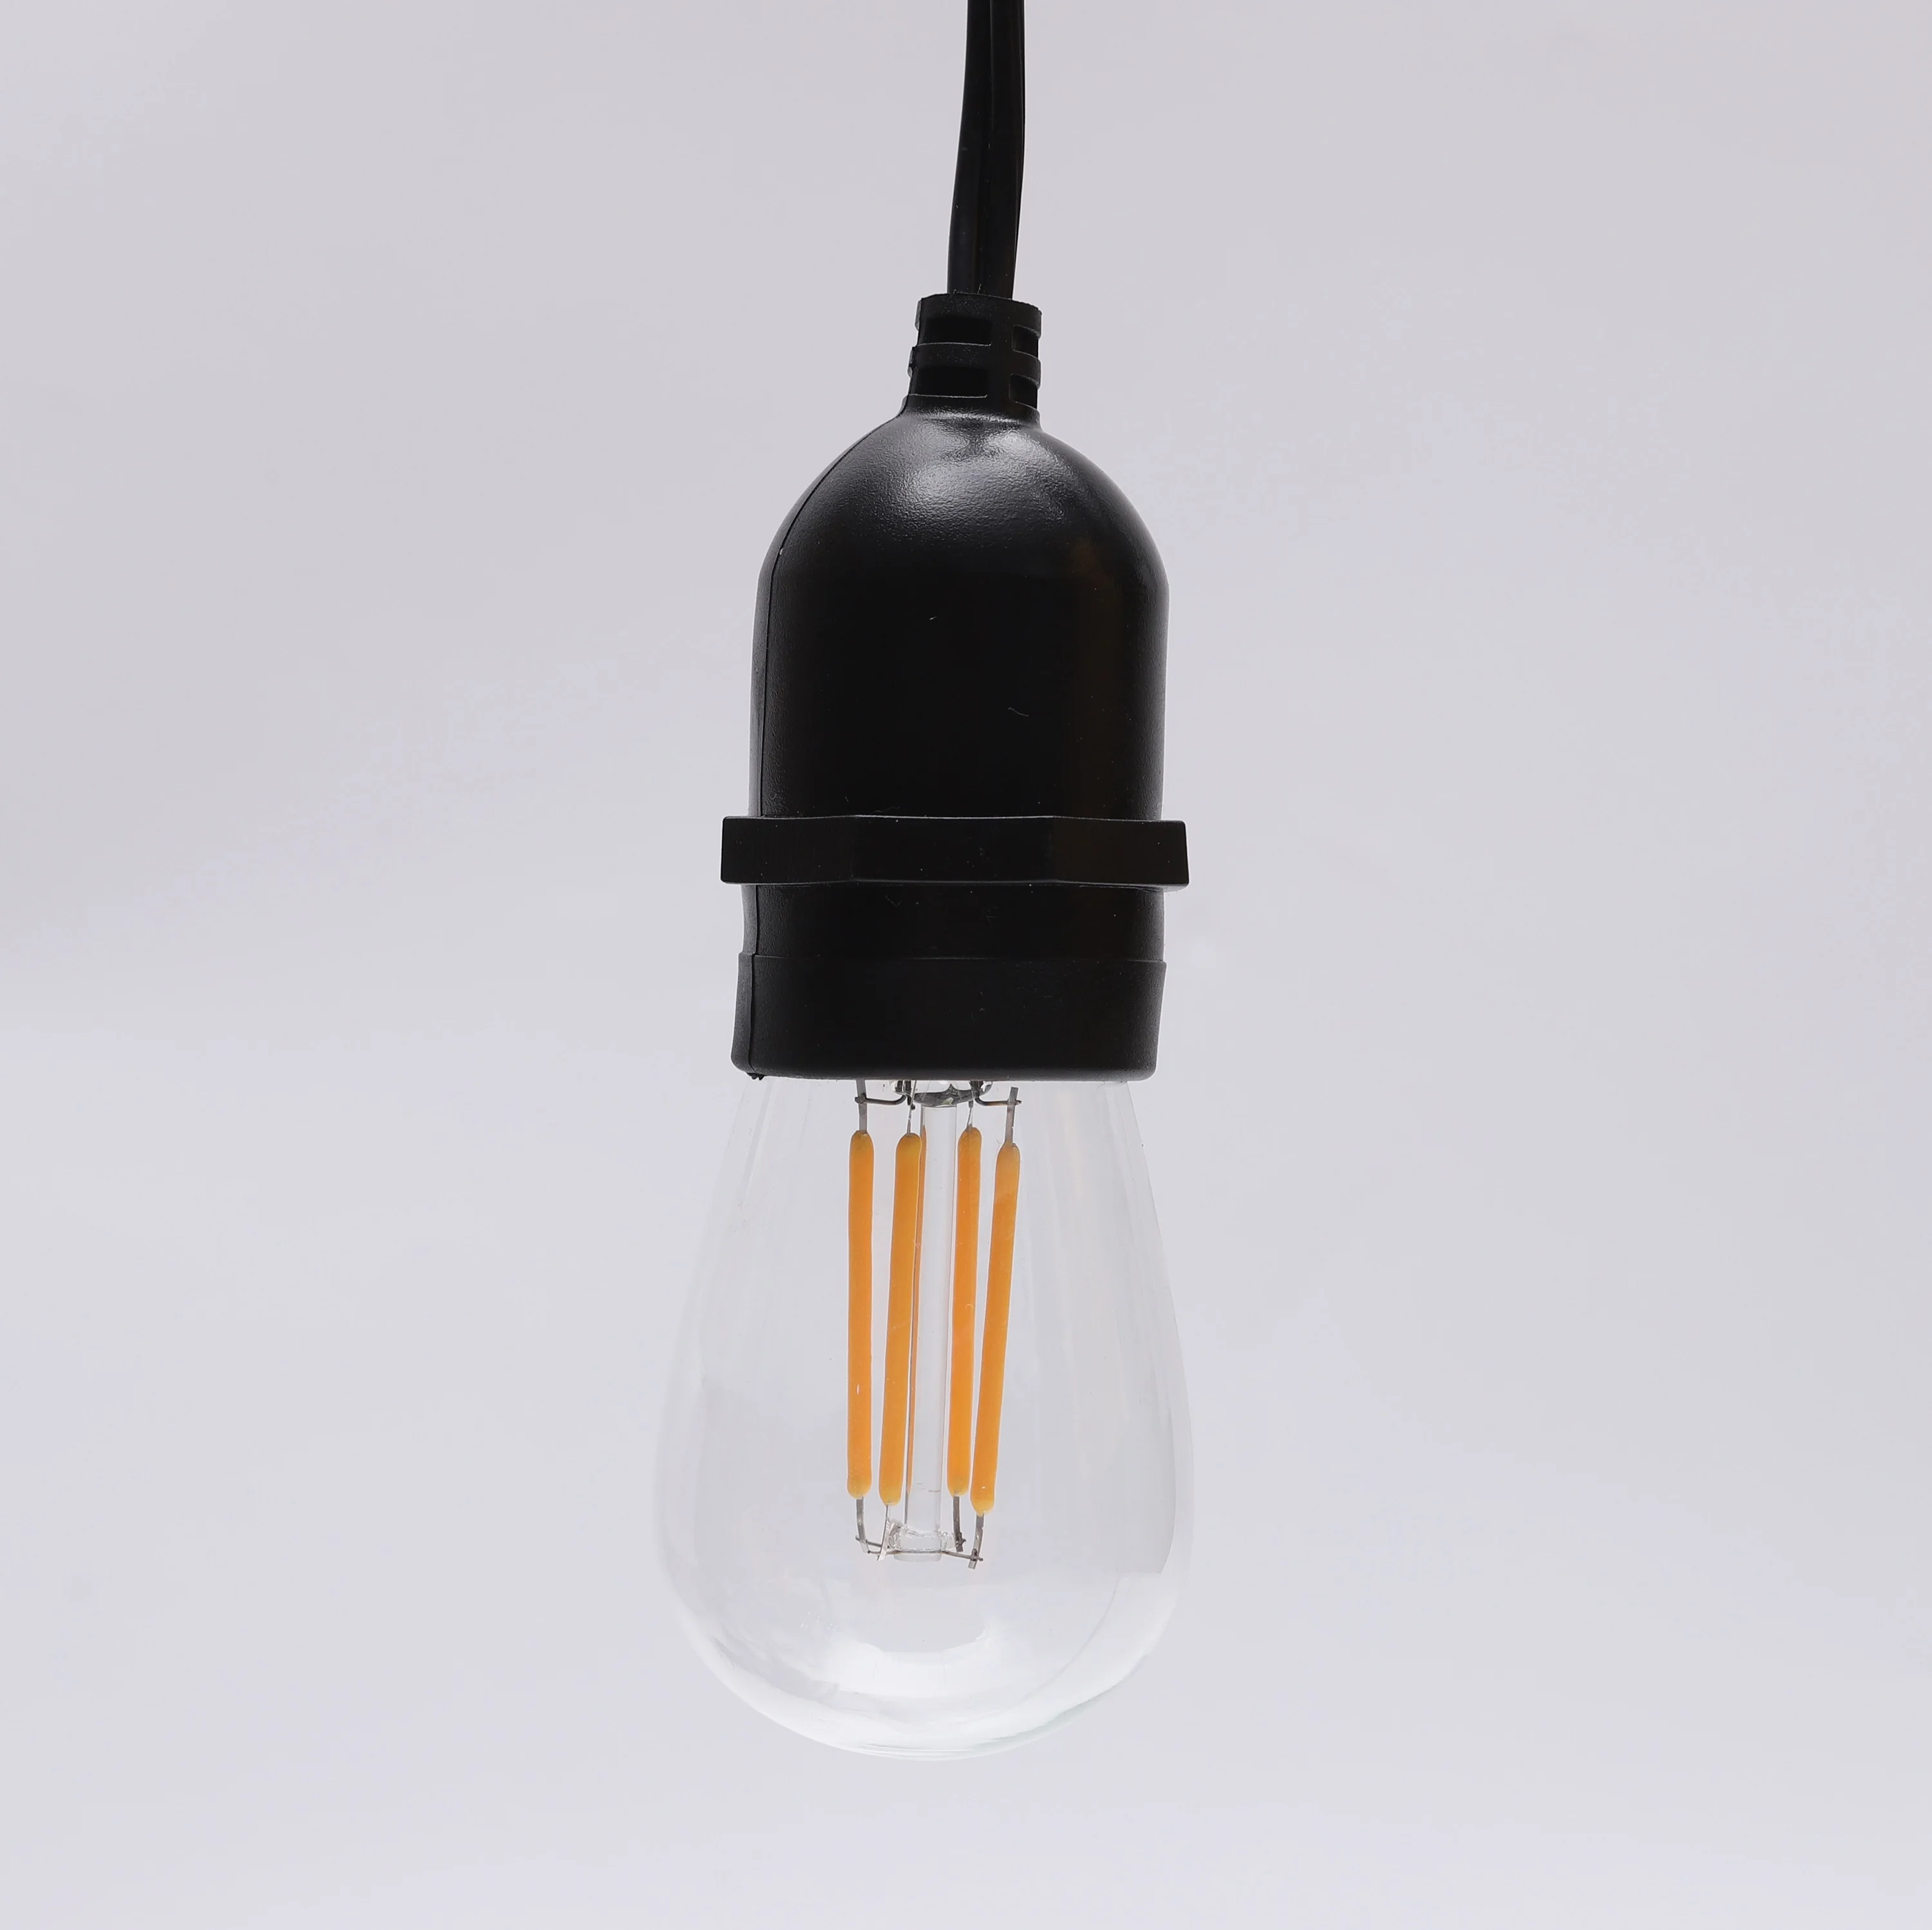 Outdoor Vintage Patio Decorative E27 Dimmable Spiral Light Led Filament Bulb St45 Festoon Garland Lights Hanging Lamp